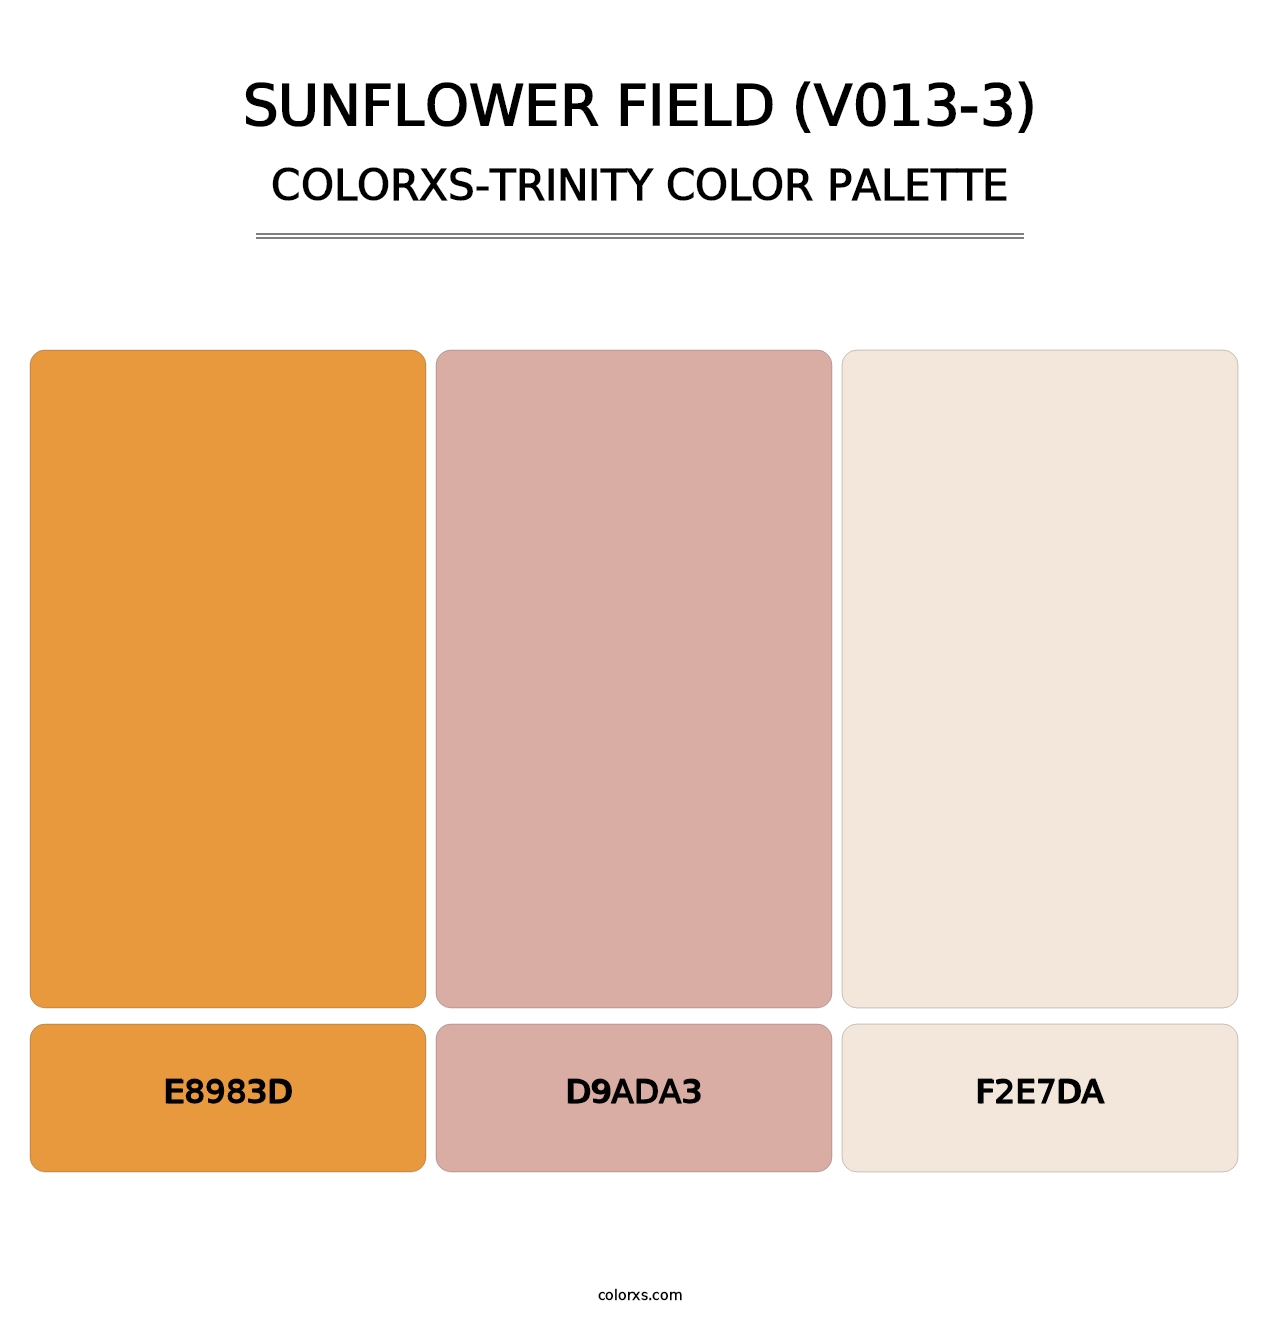 Sunflower Field (V013-3) - Colorxs Trinity Palette